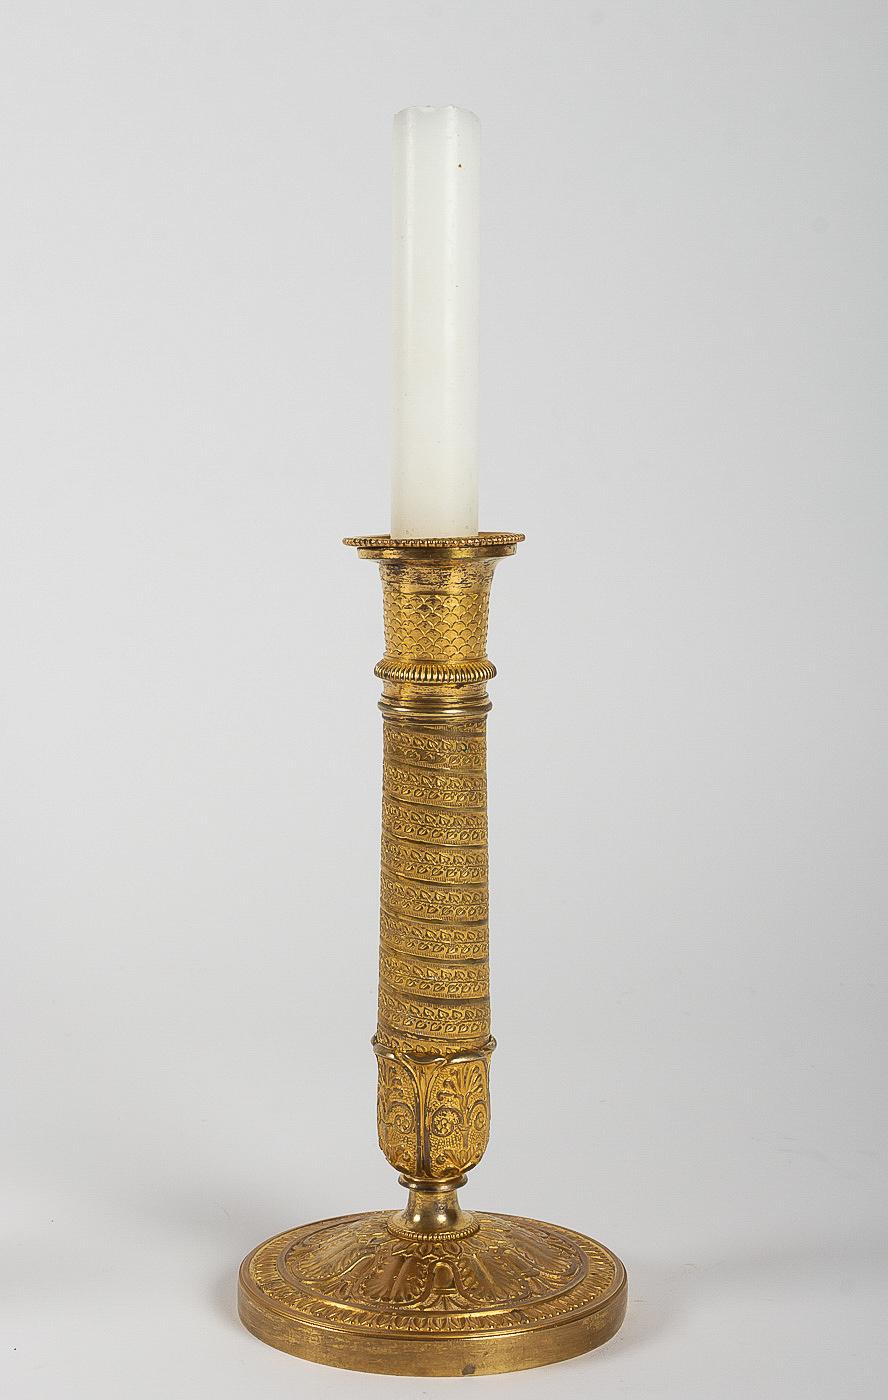 French Empire Period, Pair of Small Chiseled Gilt-Bronze Candlesticks Circa 1805 (19. Jahrhundert)